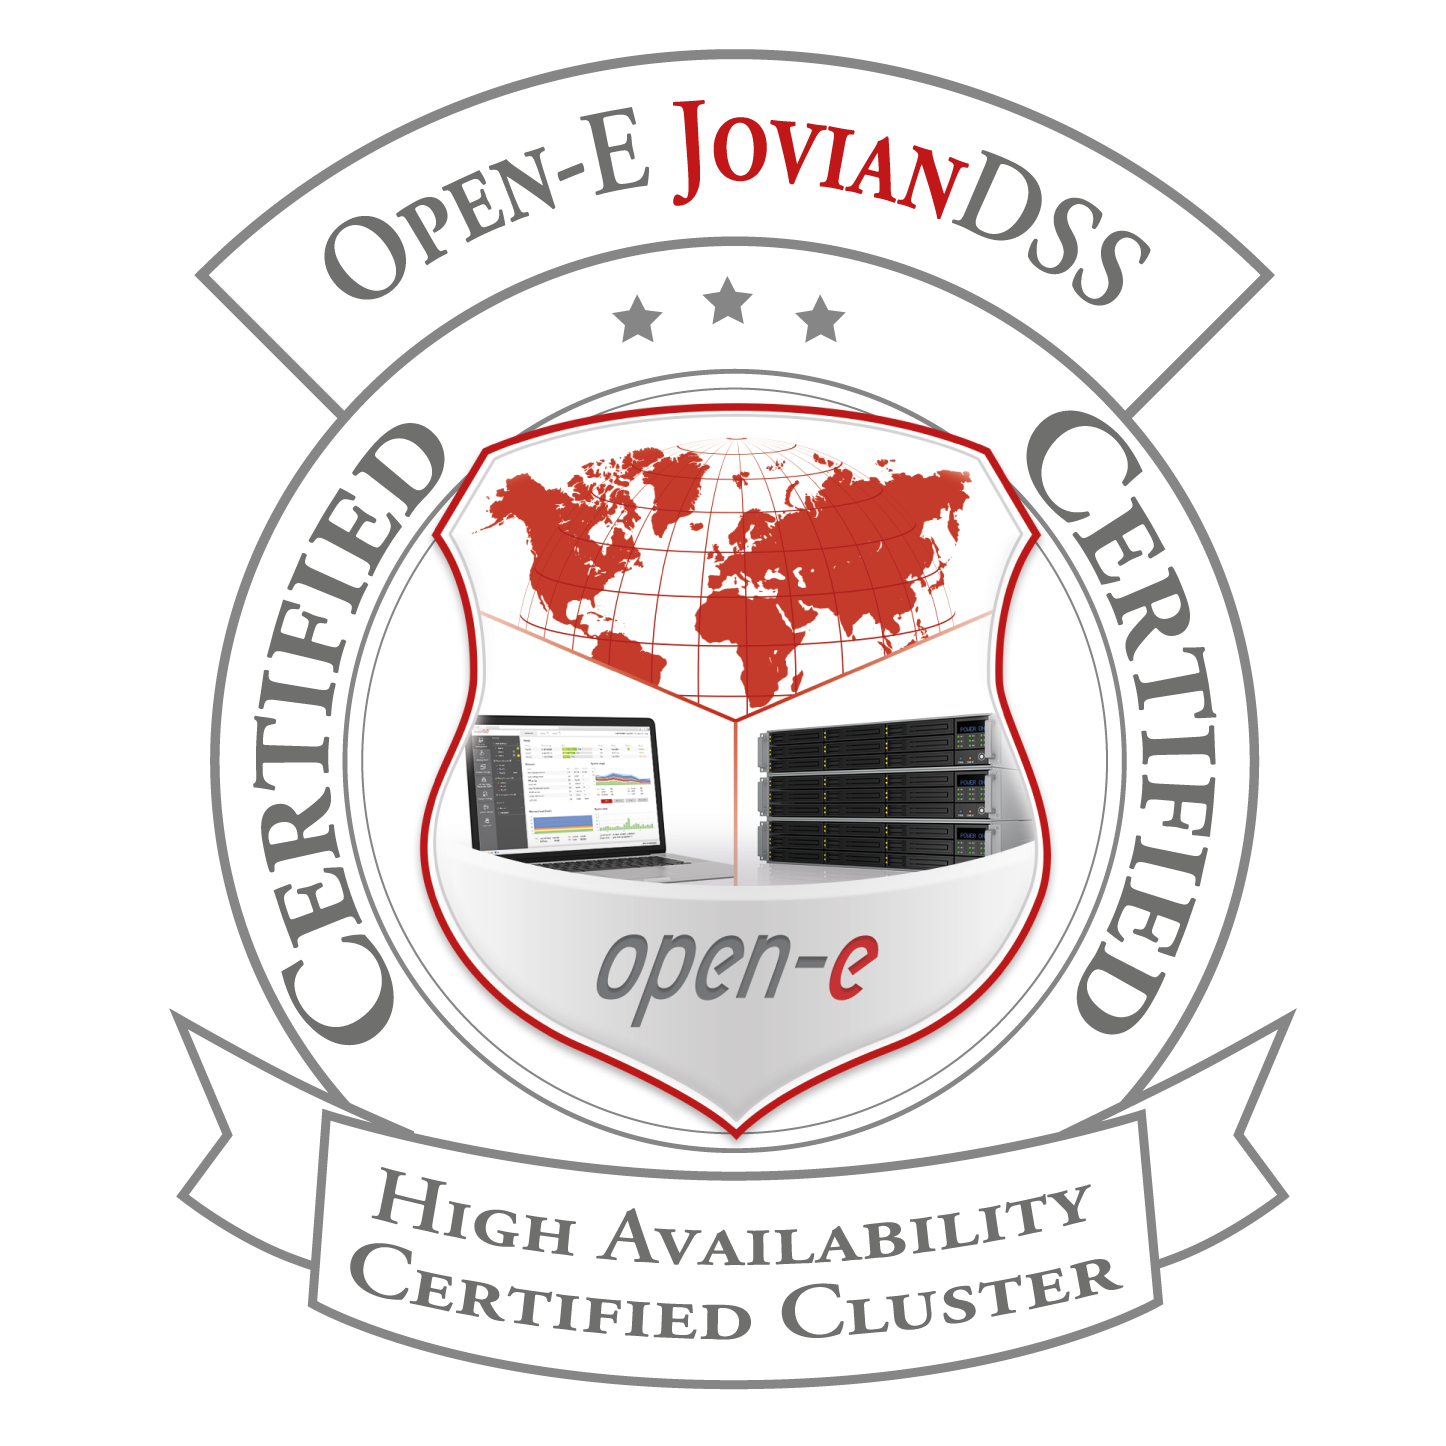 Open-E JovianDSS High Availability Certification Logo 2019 badge